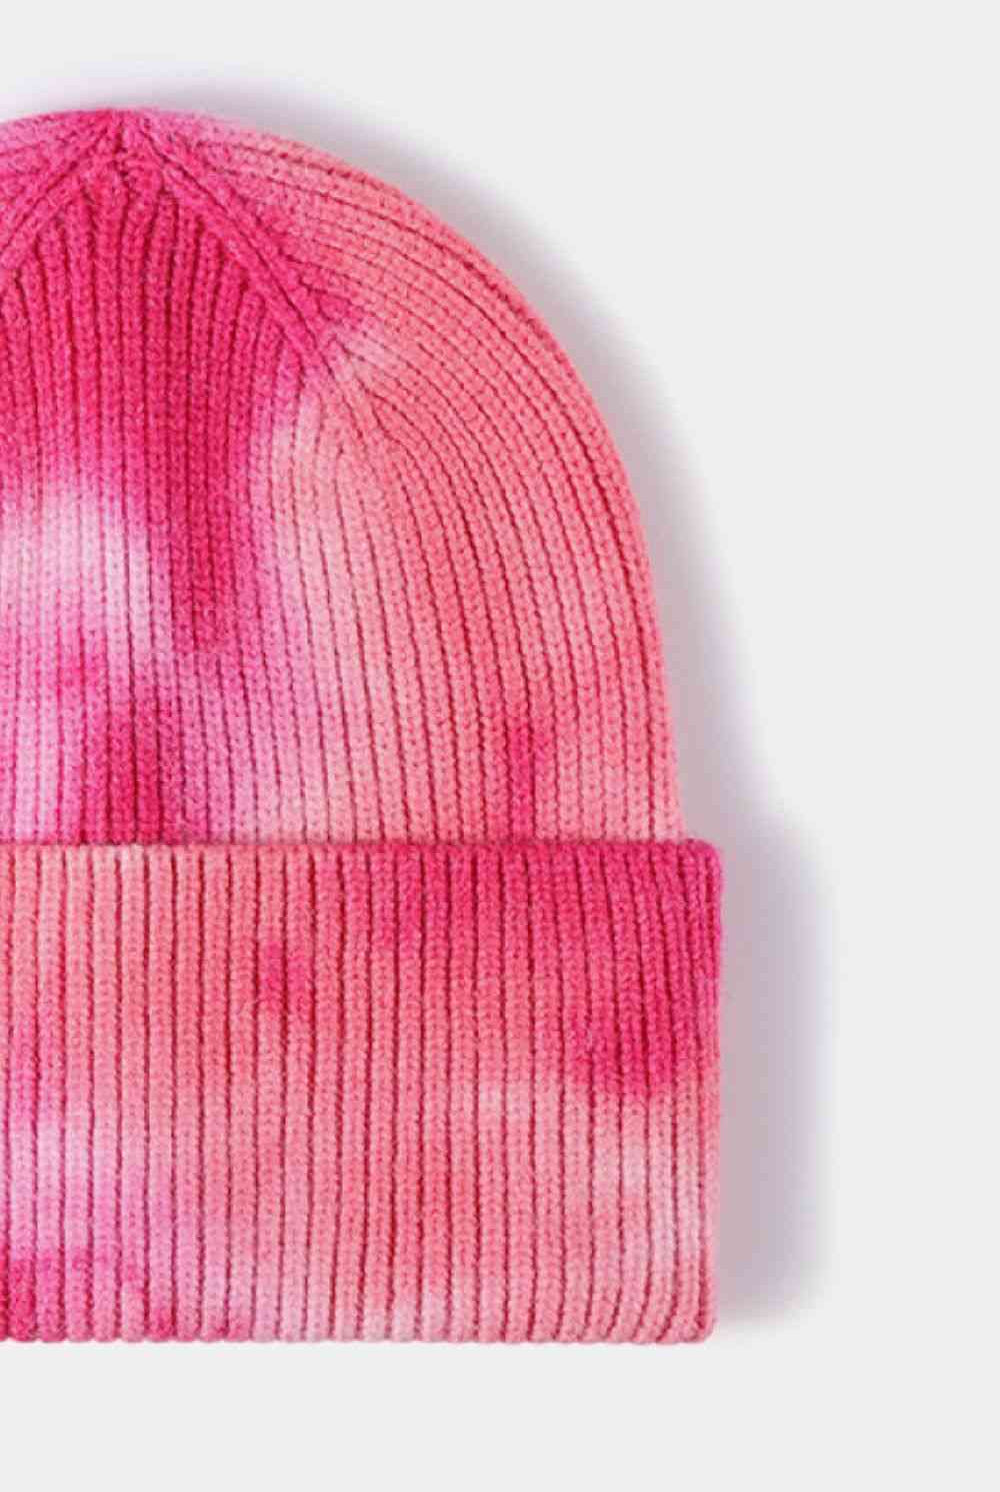 Misty Rose Tie-Dye Cuffed Rib-Knit Beanie Hat Winter Accessories